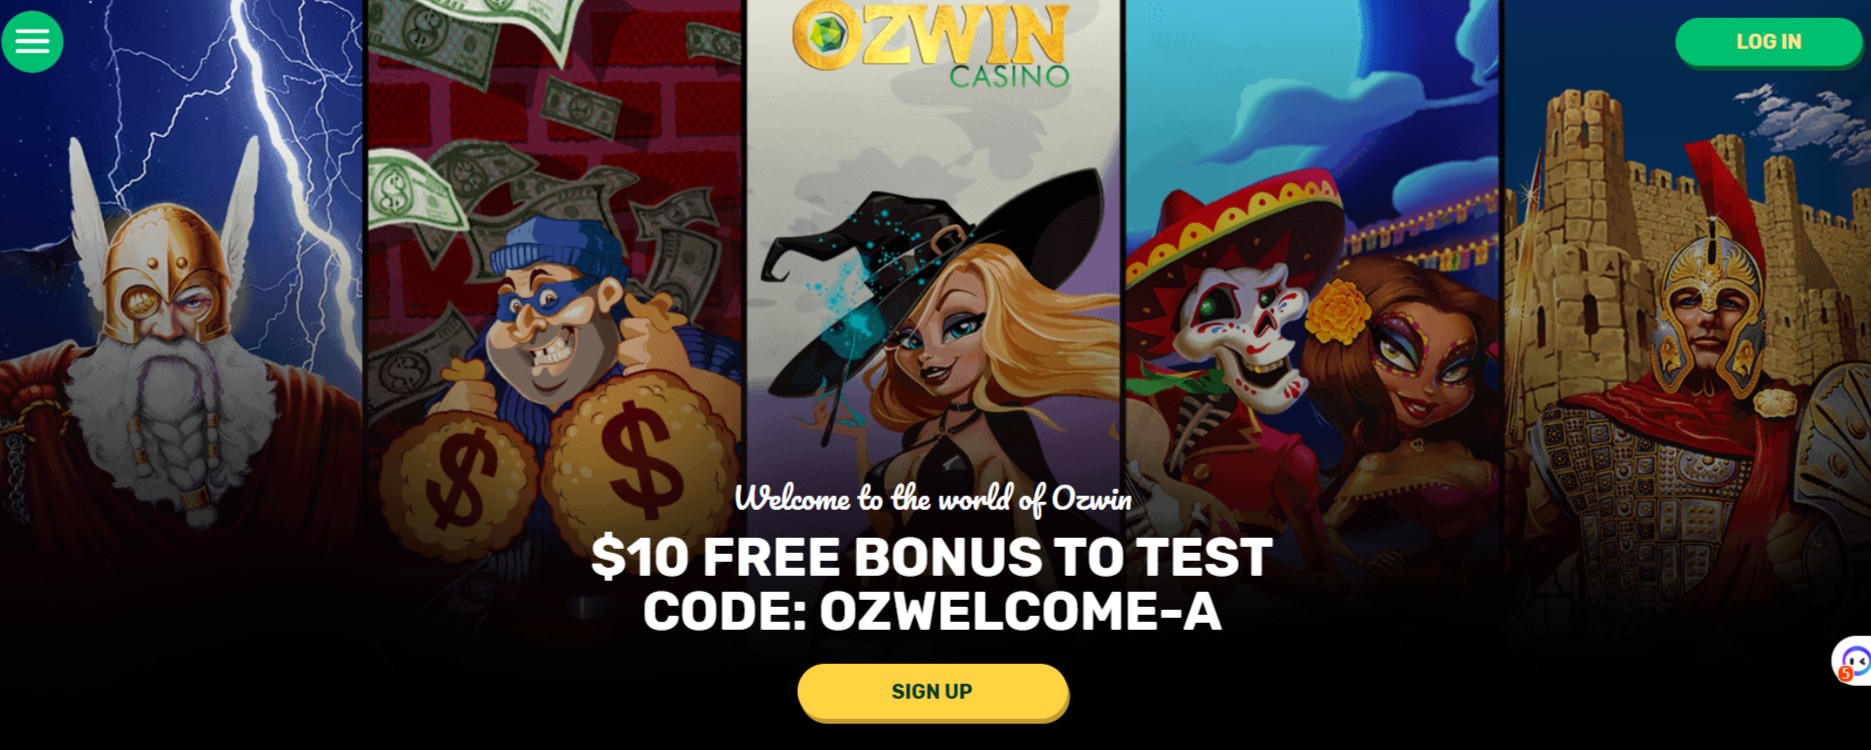 ozwin casino website homepage screenshot